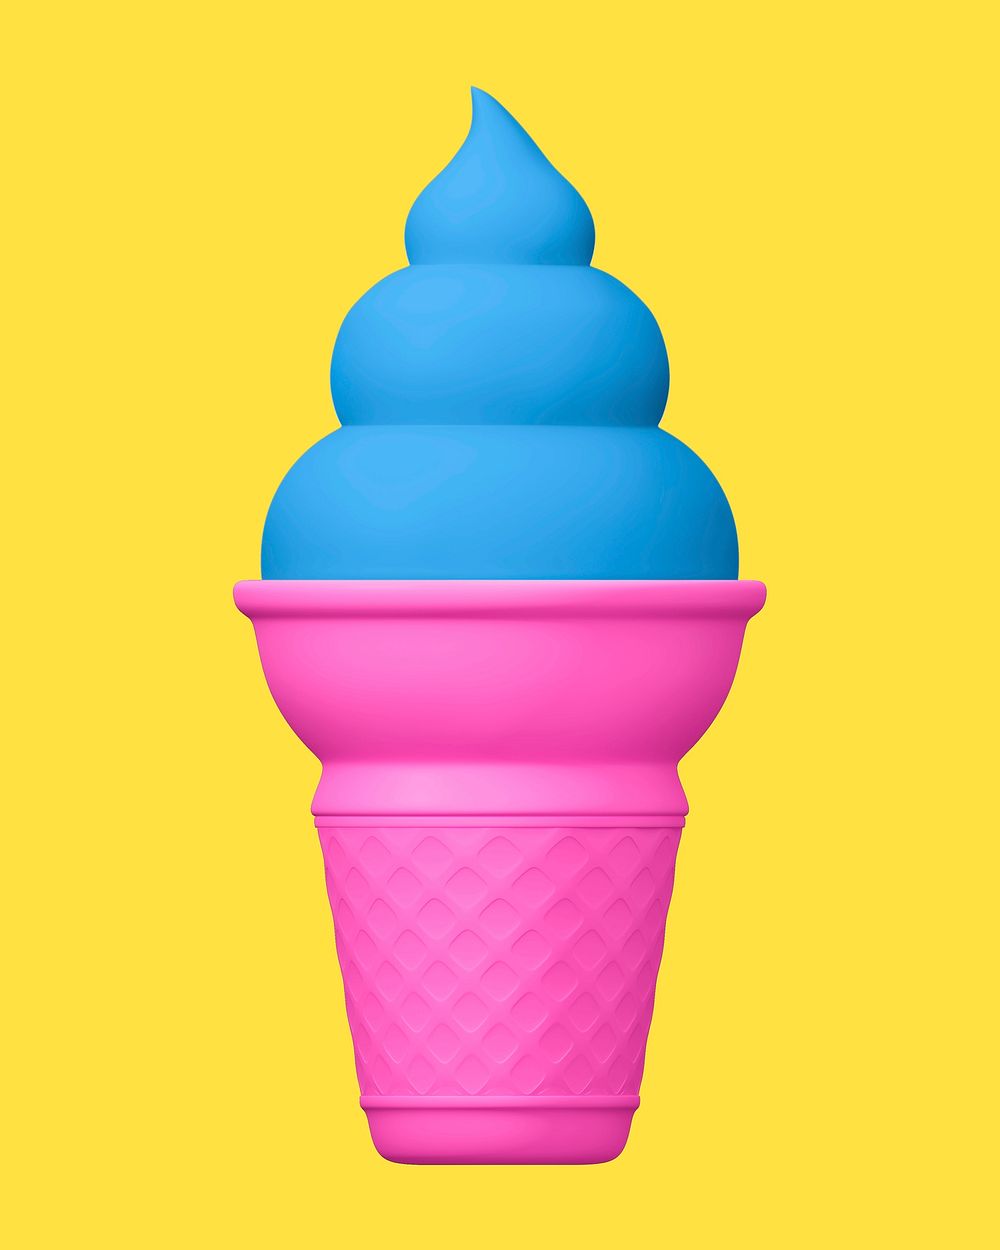 Ice-cream cone, 3D dessert illustration psd